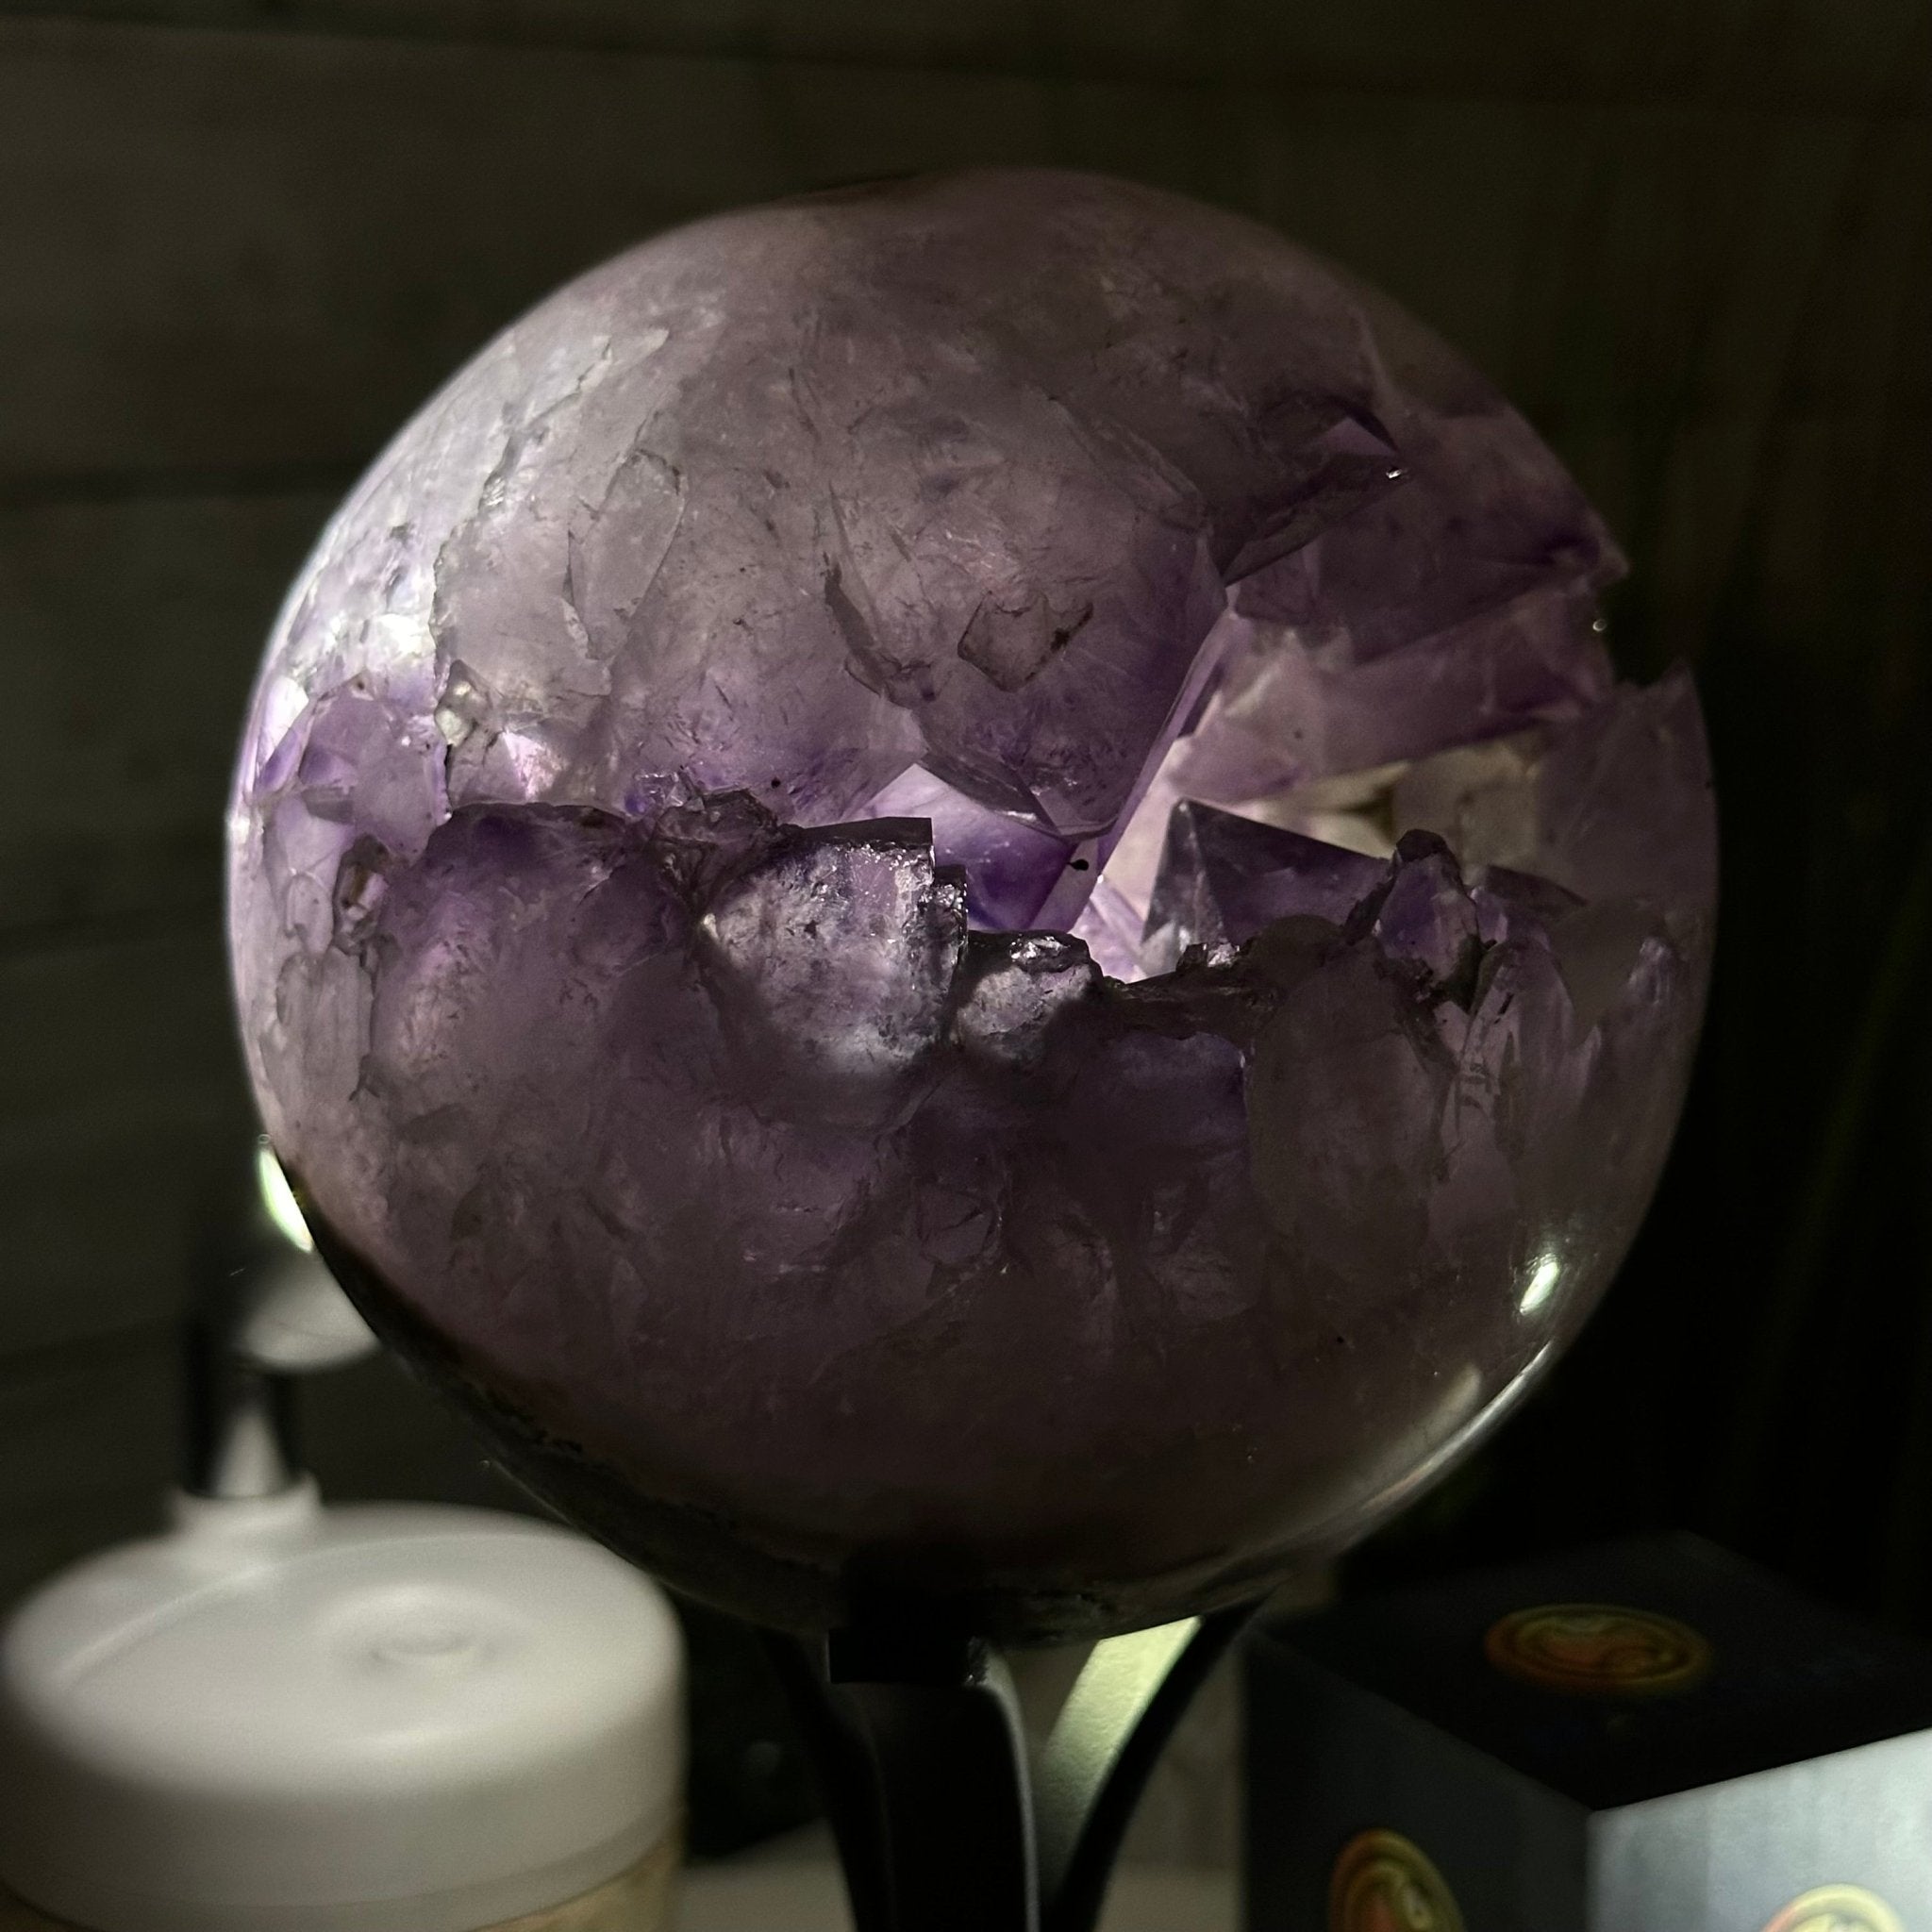 Druzy Amethyst Sphere on a Metal Stand, 4.2 lbs & 9.1" Tall #5630-0061 - Brazil GemsBrazil GemsDruzy Amethyst Sphere on a Metal Stand, 4.2 lbs & 9.1" Tall #5630-0061Spheres5630-0061